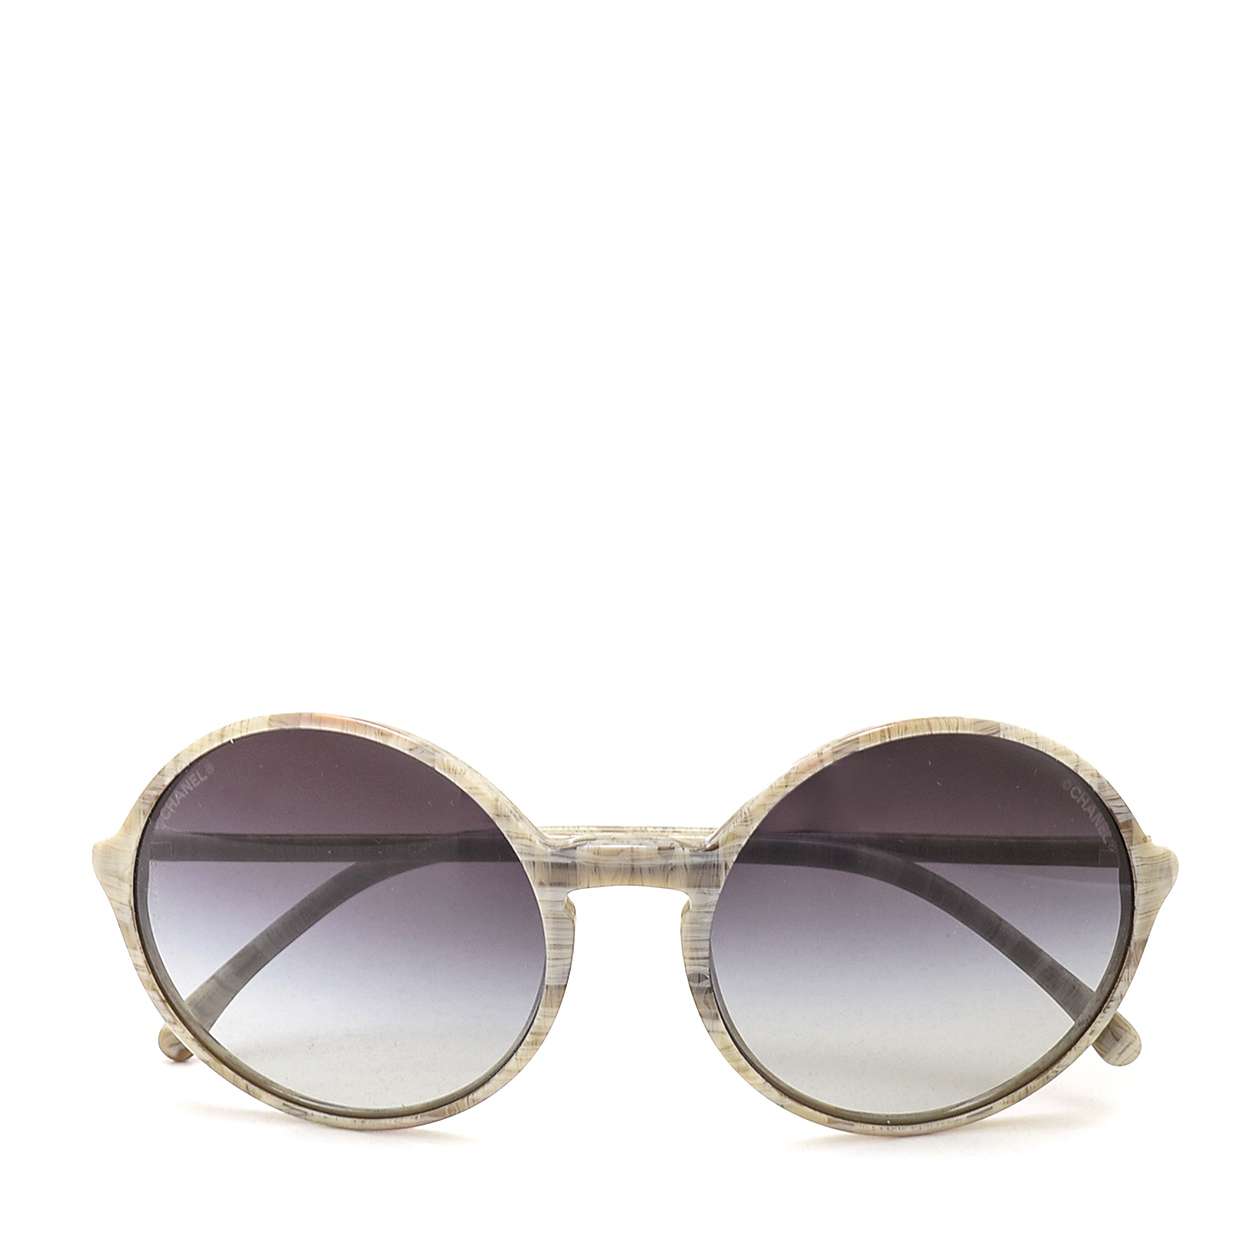 Chanel - Grey Retro Round Signature Light Sunglasses